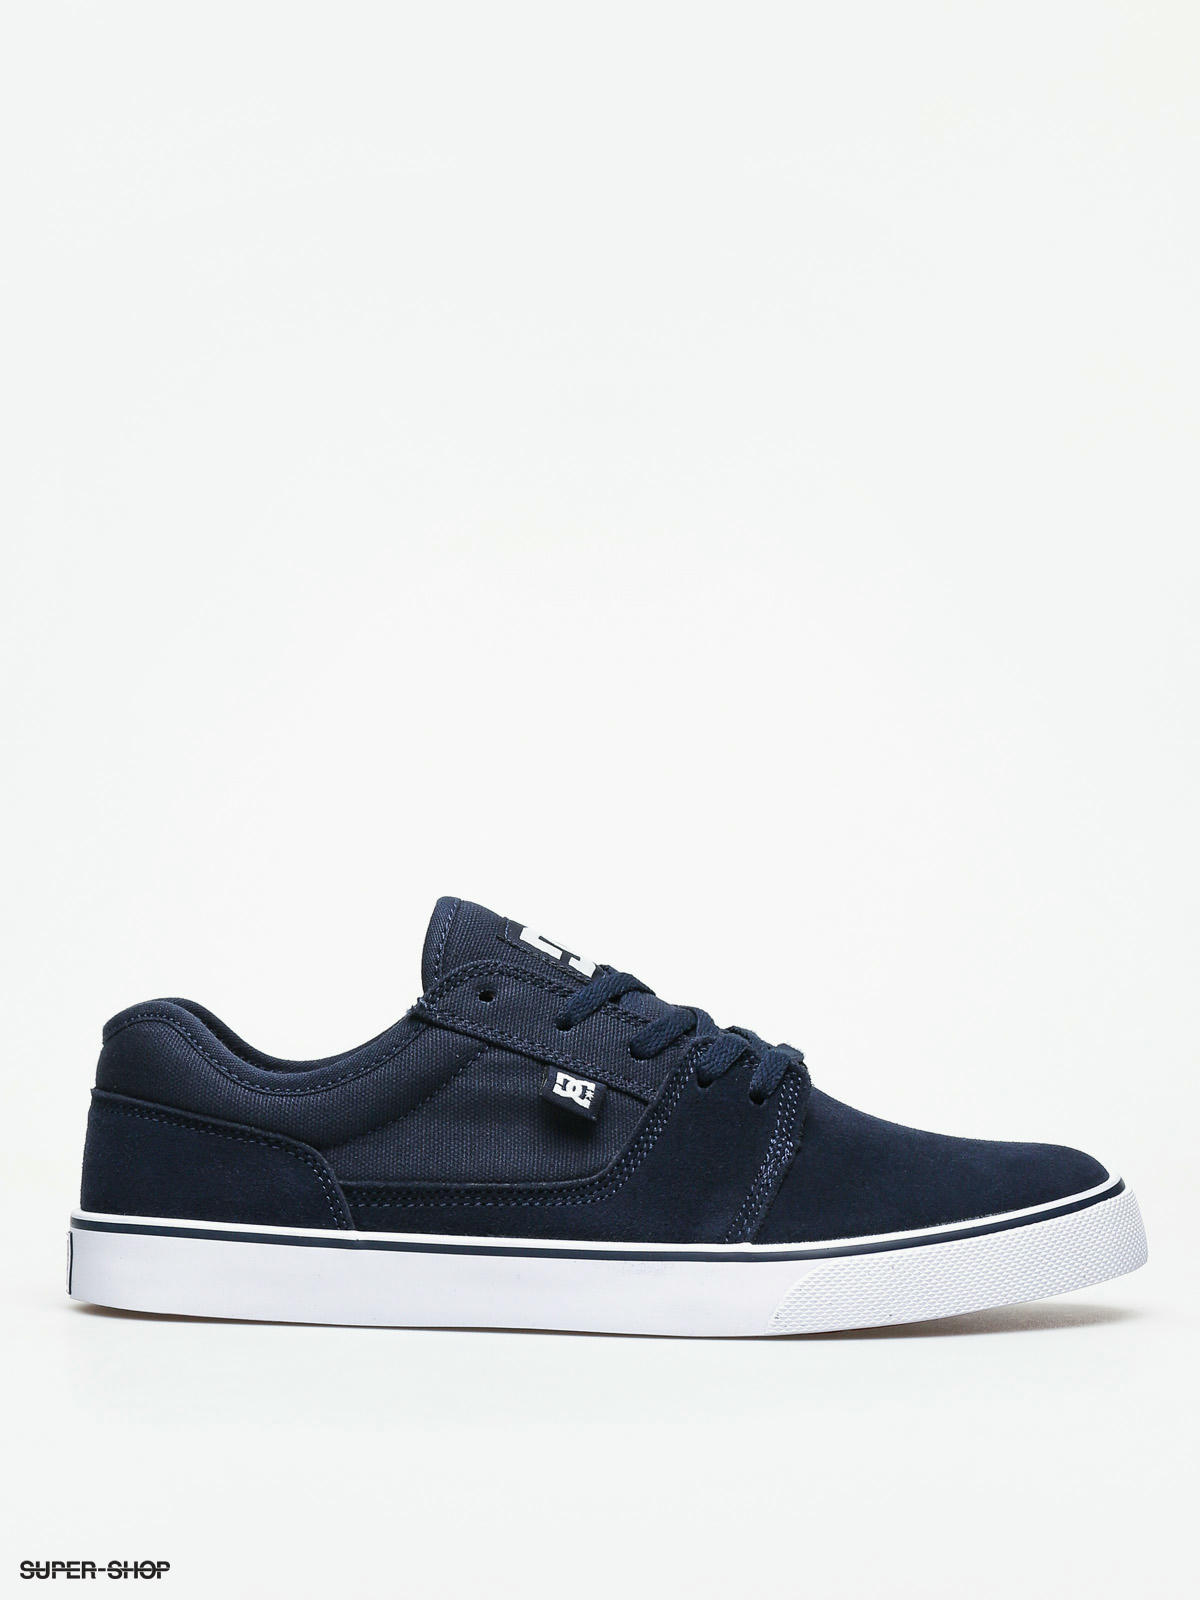 DC Tonik Shoes (navy/blue/white)